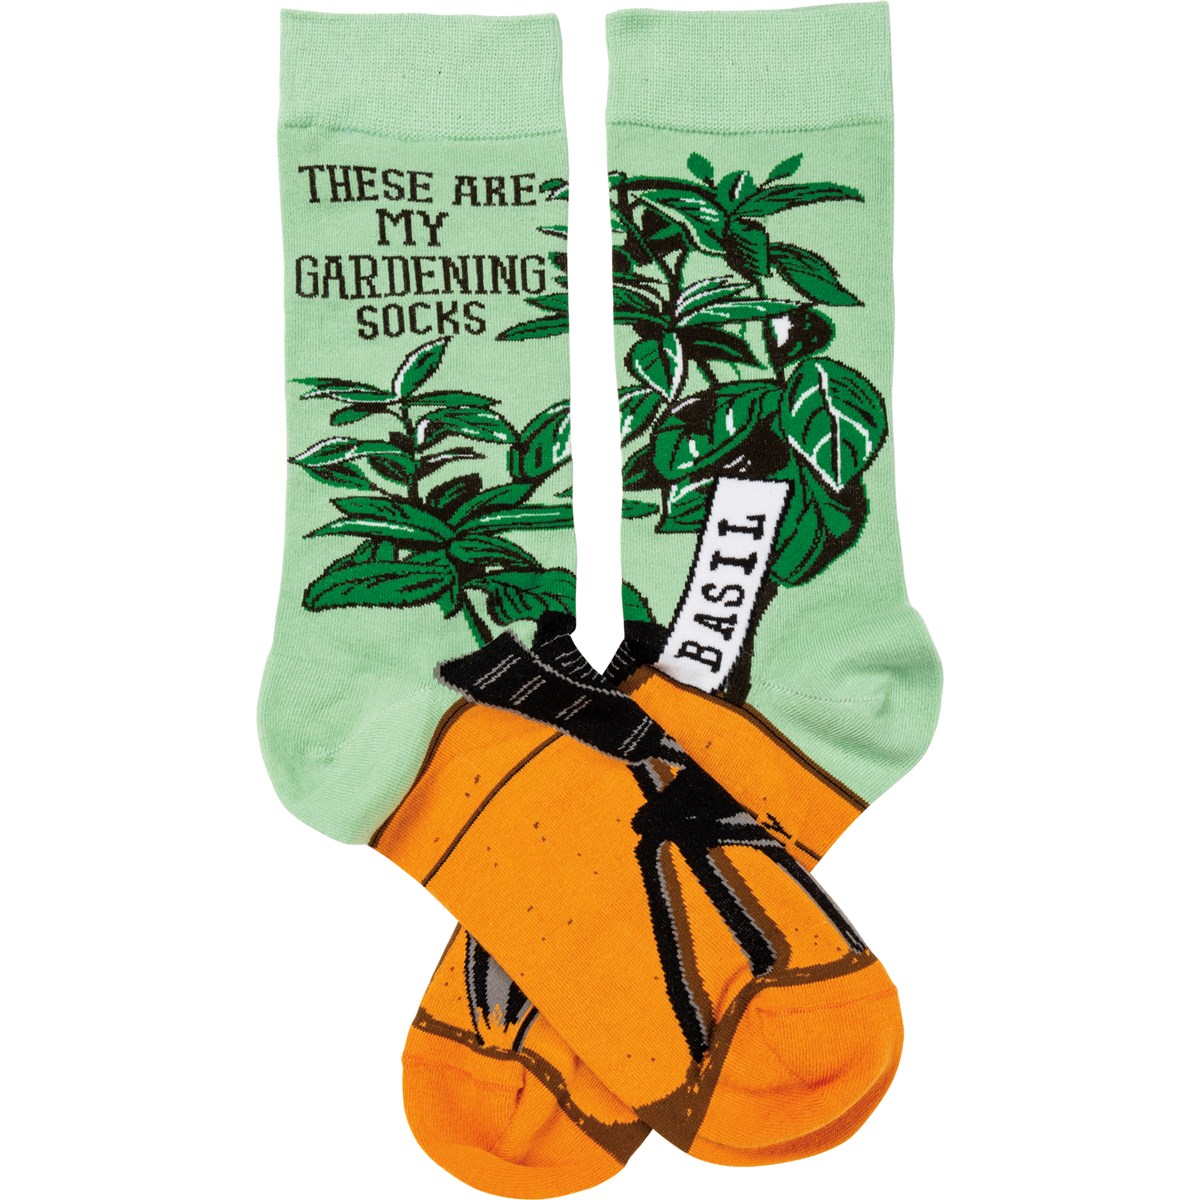 These Are My Gardening Socks - Cotton, Nylon, Spandex